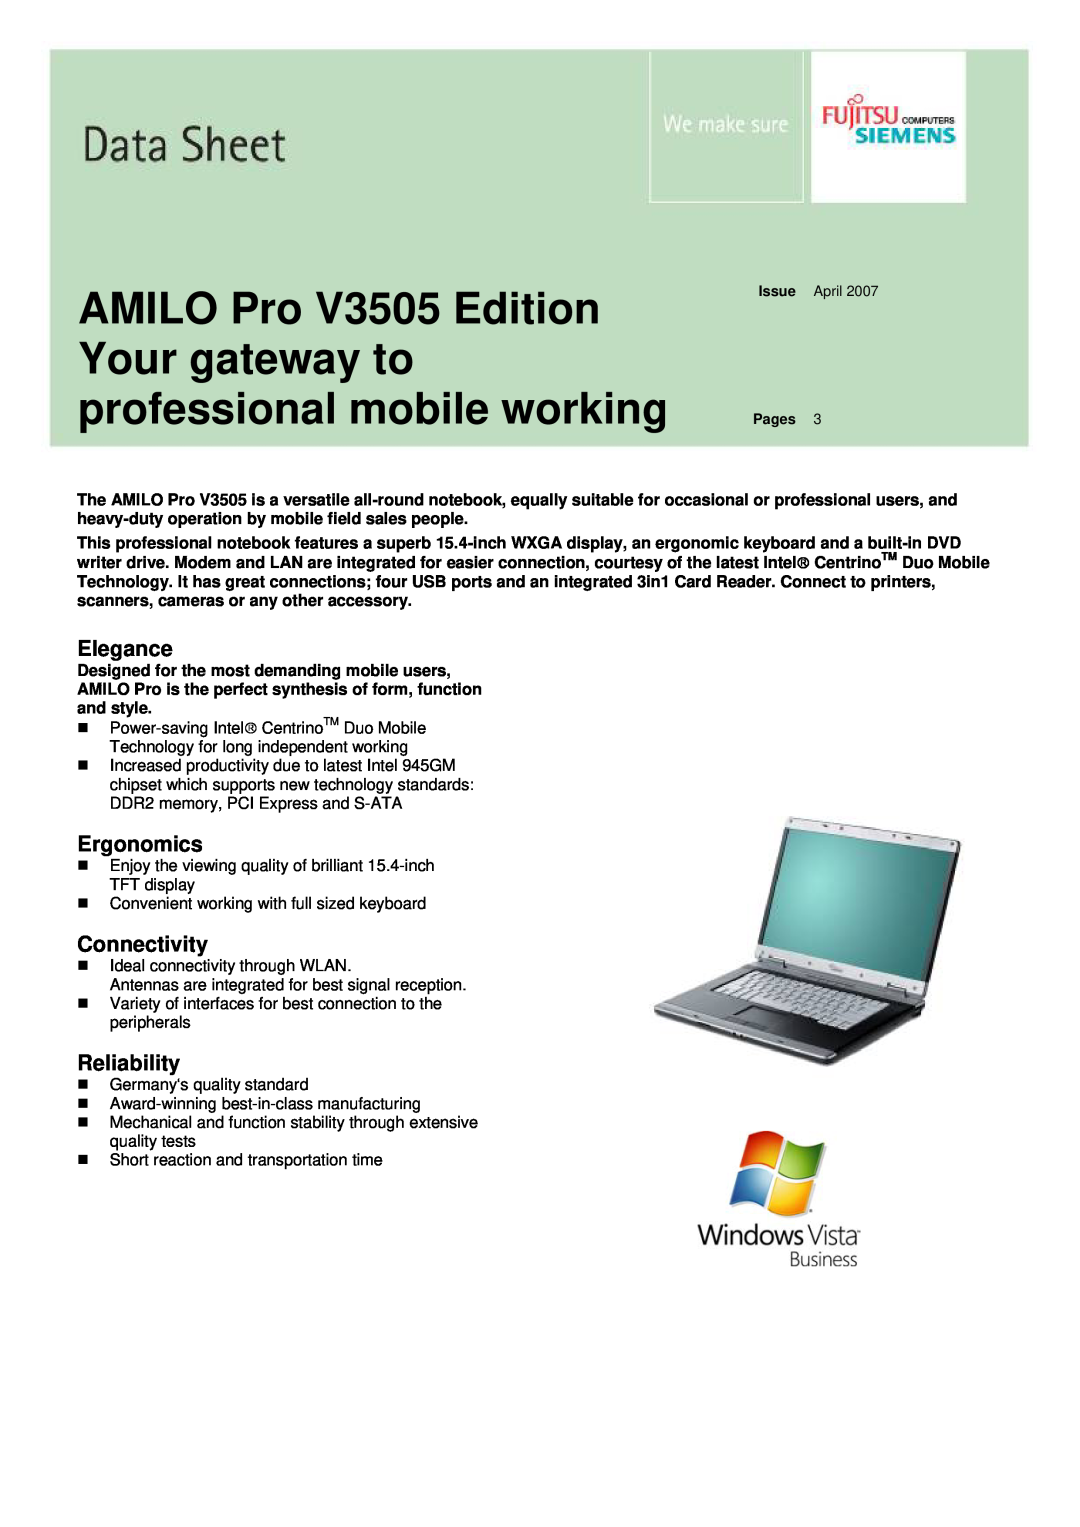 Fujitsu manual AMILO Pro V3505 Edition Your gateway to professional mobile working, Elegance, Ergonomics, Connectivity 